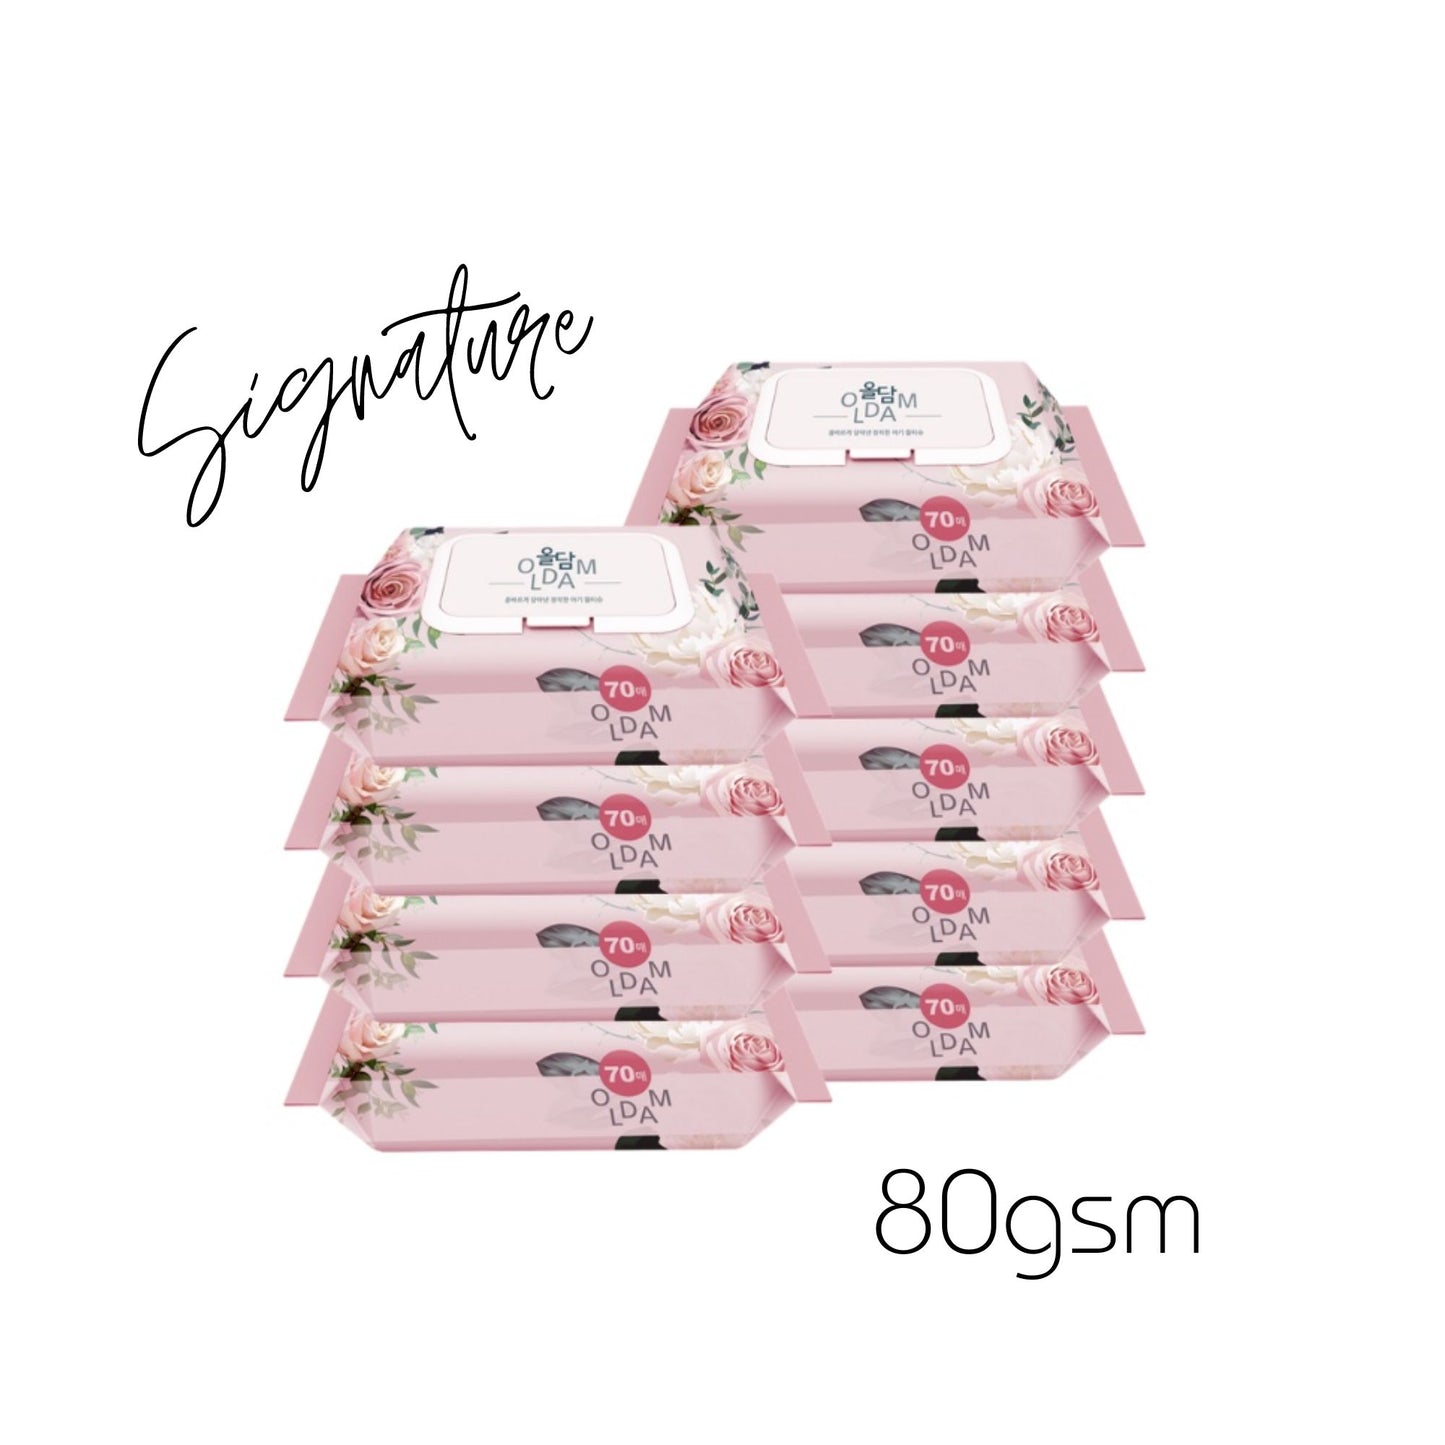 Oldam 올담 Signature Korean Baby Wipes (9 Packs x 70pcs) - Super Duper Thick (80gsm), Super Duper Moist